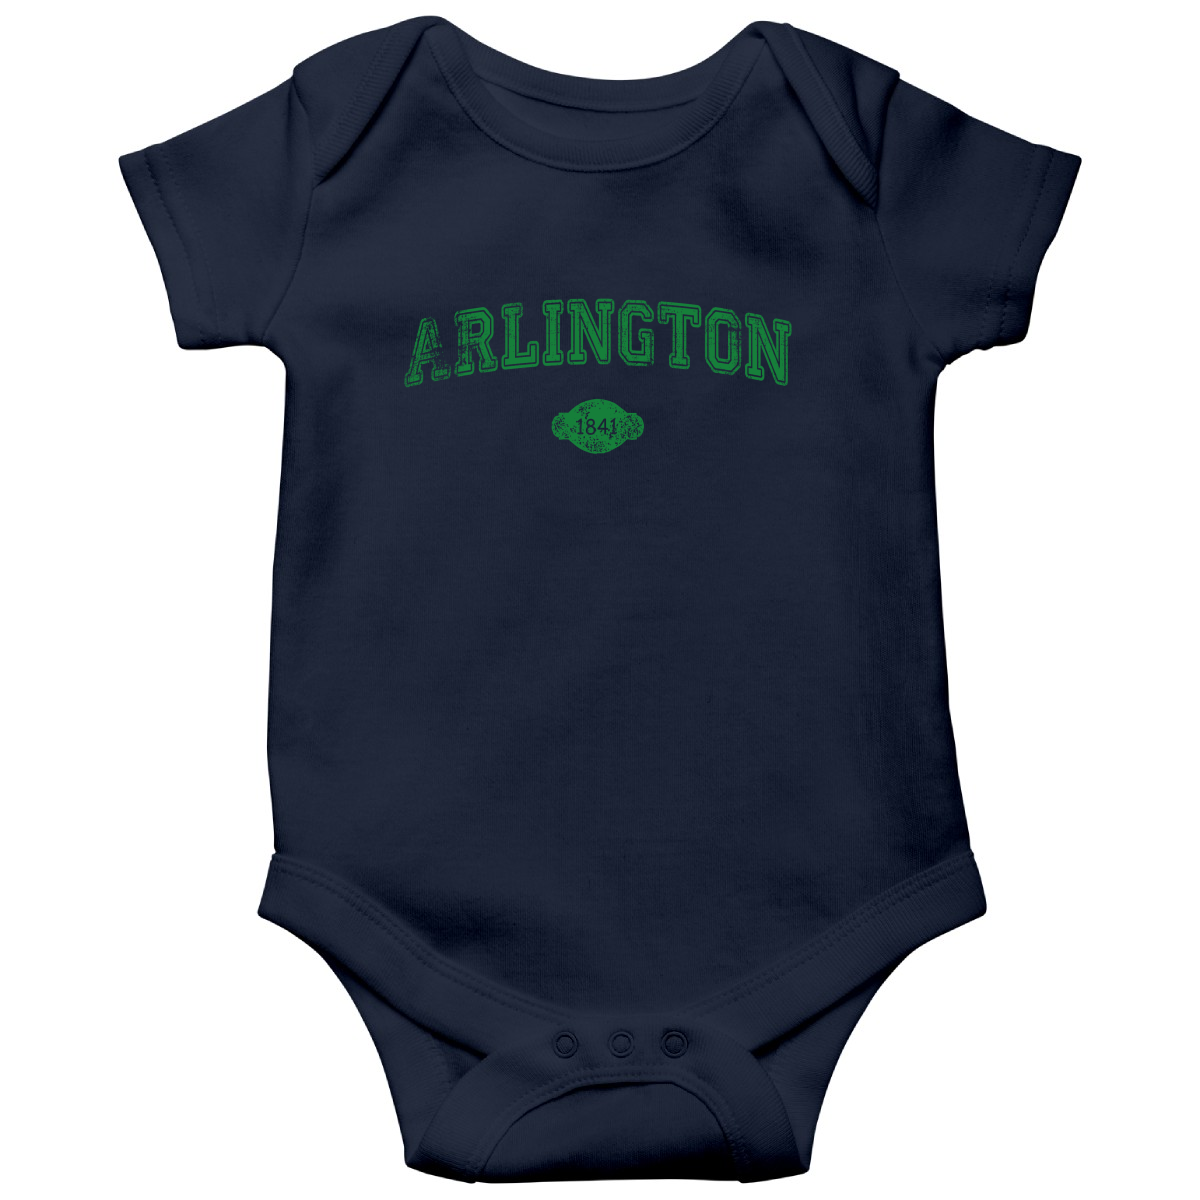 Arlington 1841 Represent Baby Bodysuits | Navy